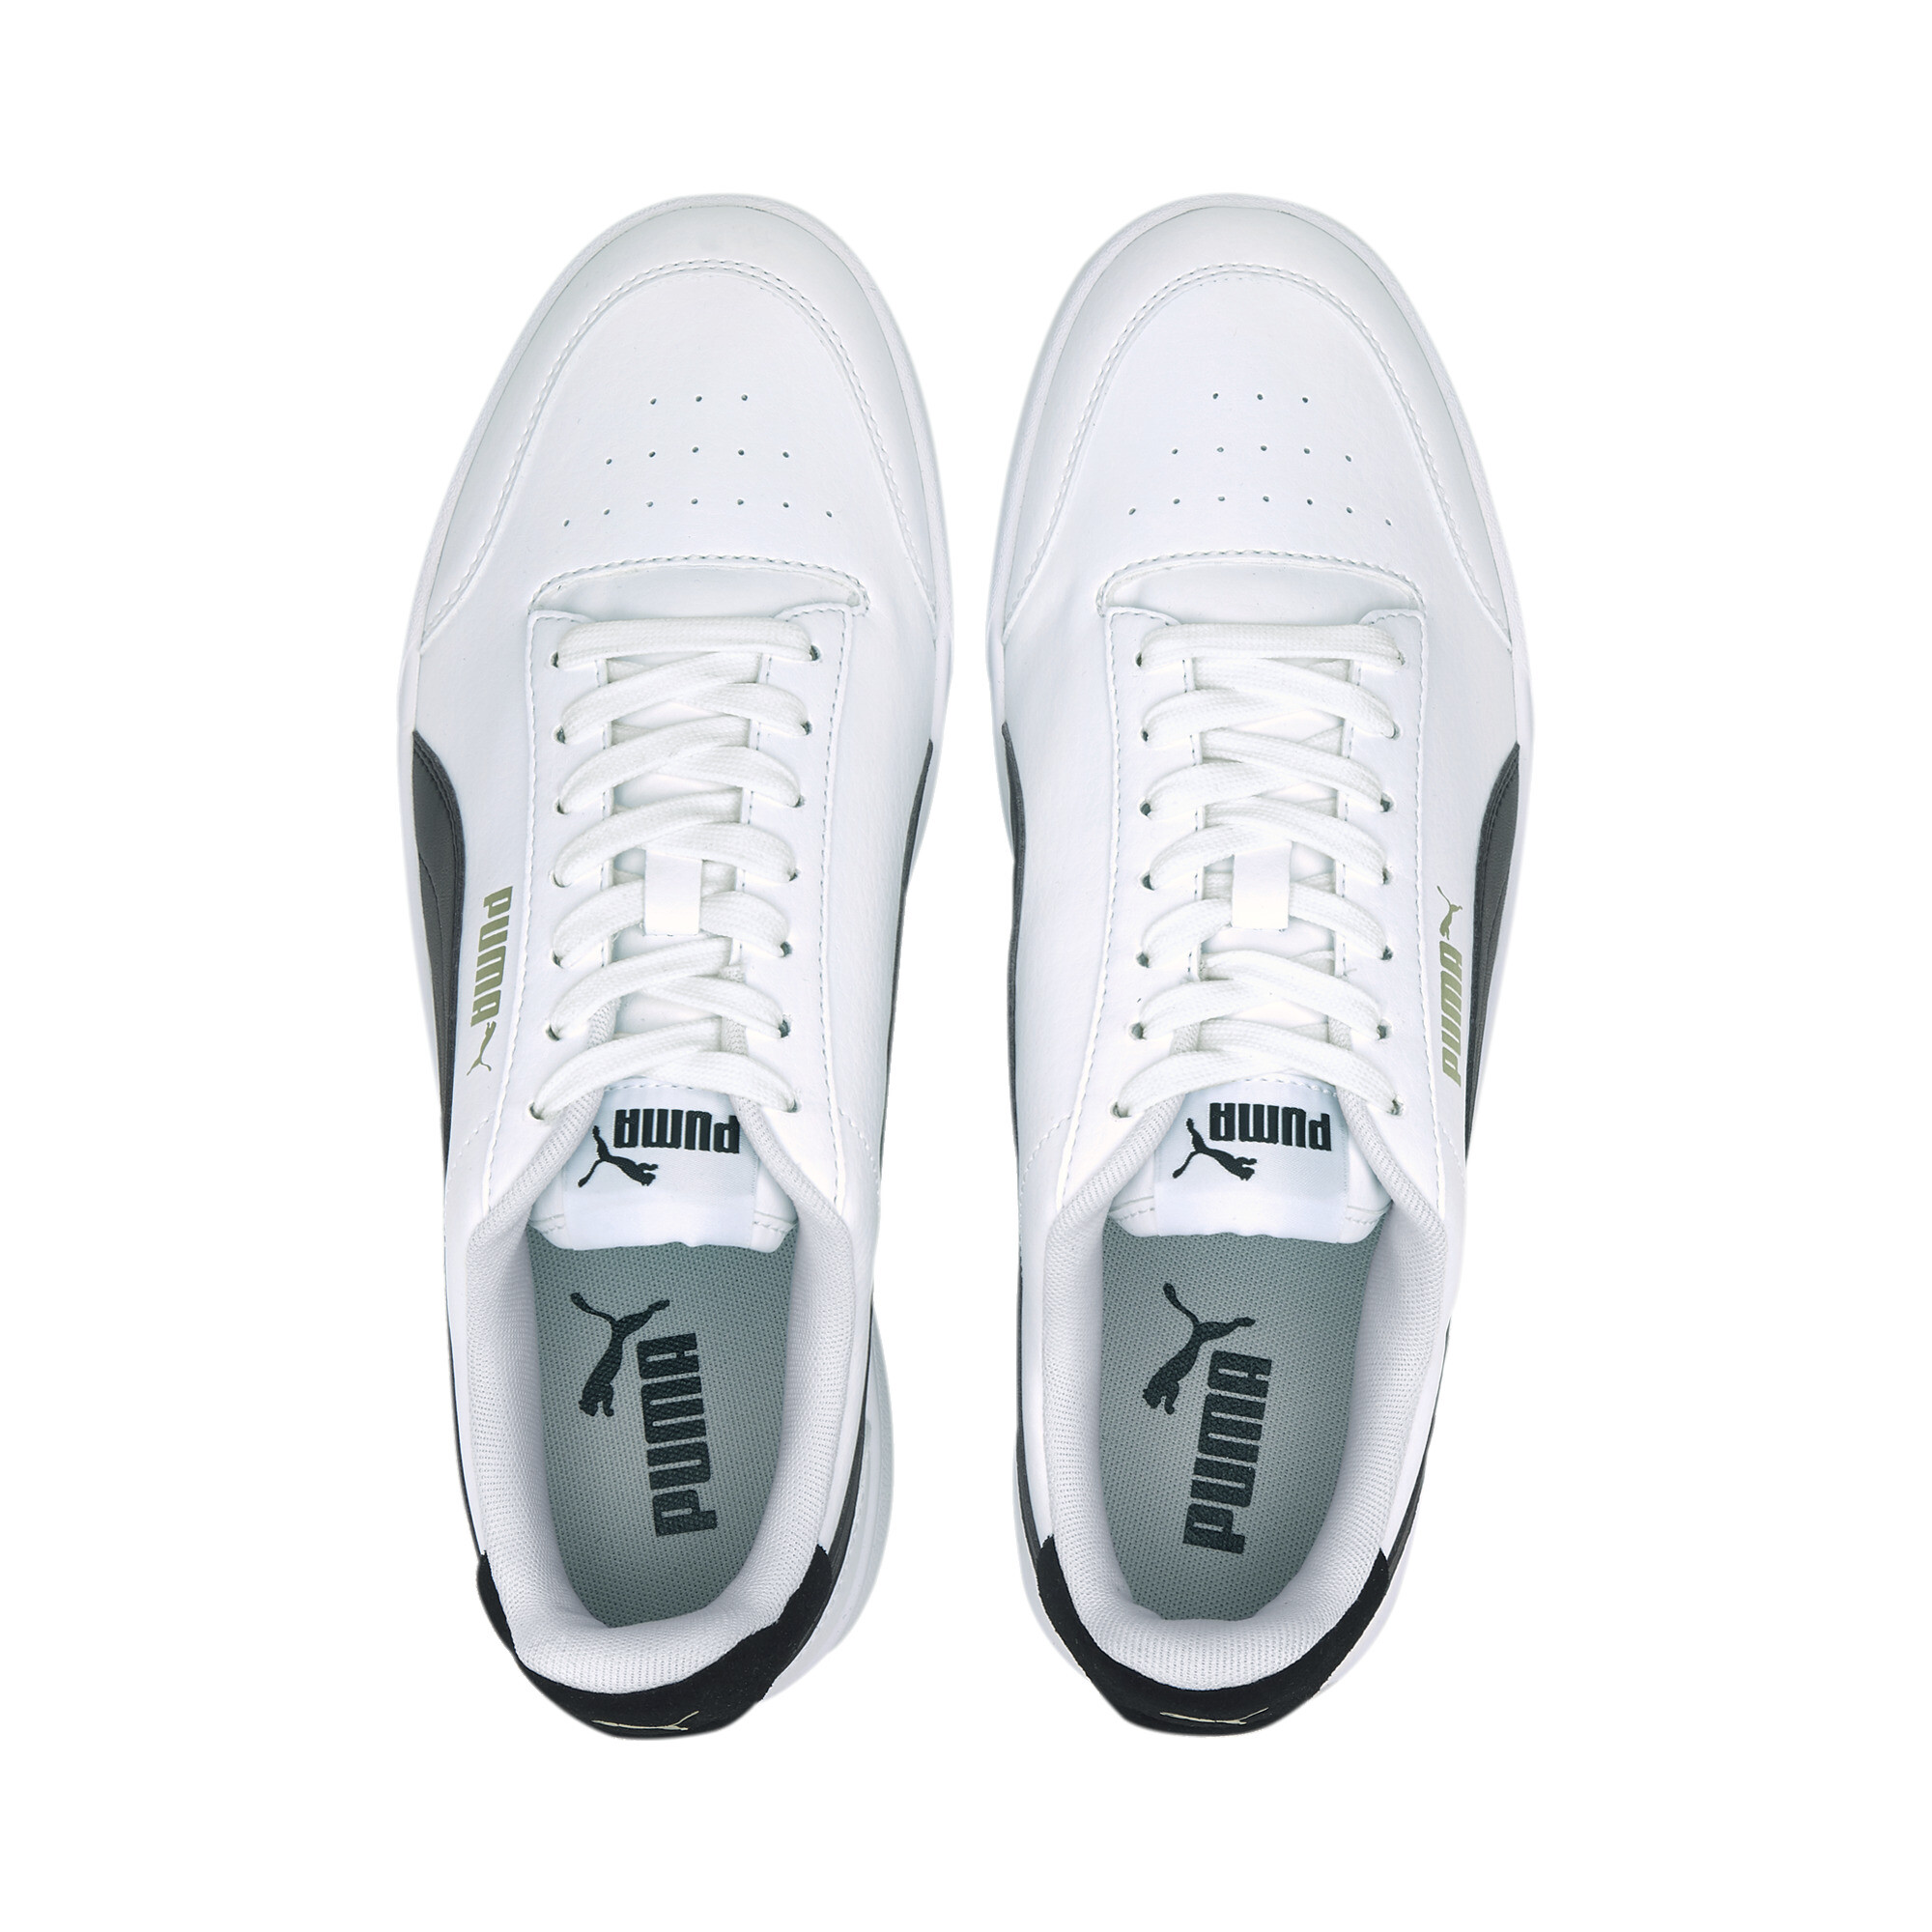 PUMA Men's Shuffle Sneakers | eBay